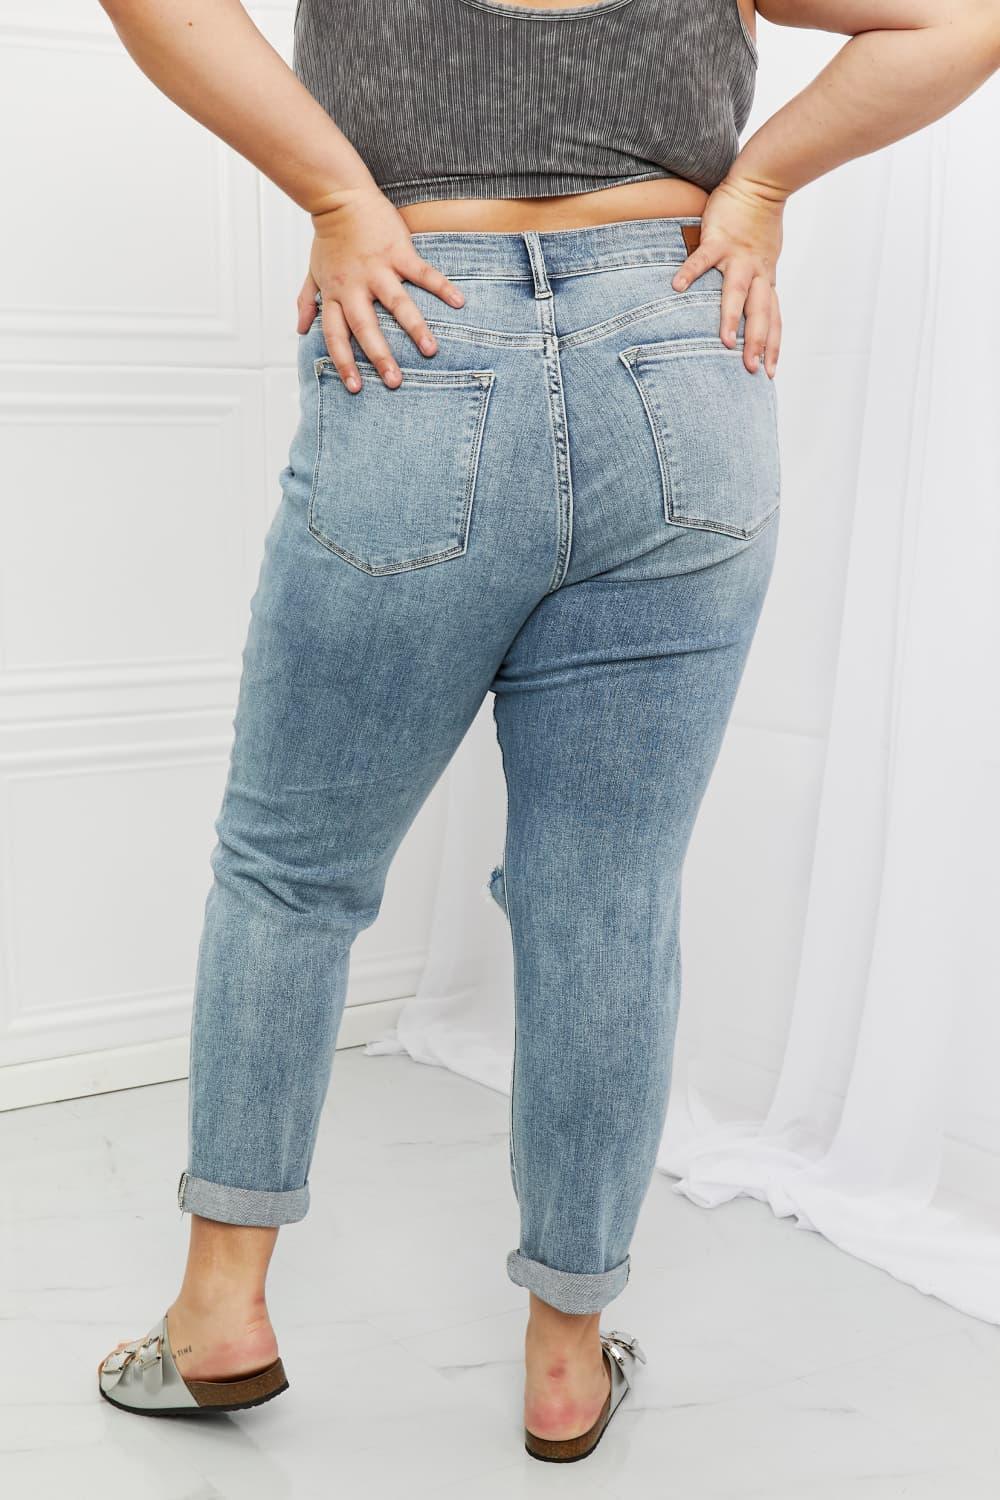 Favorite Thing Plus Size Distressed Boyfriend Jeans - MXSTUDIO.COM